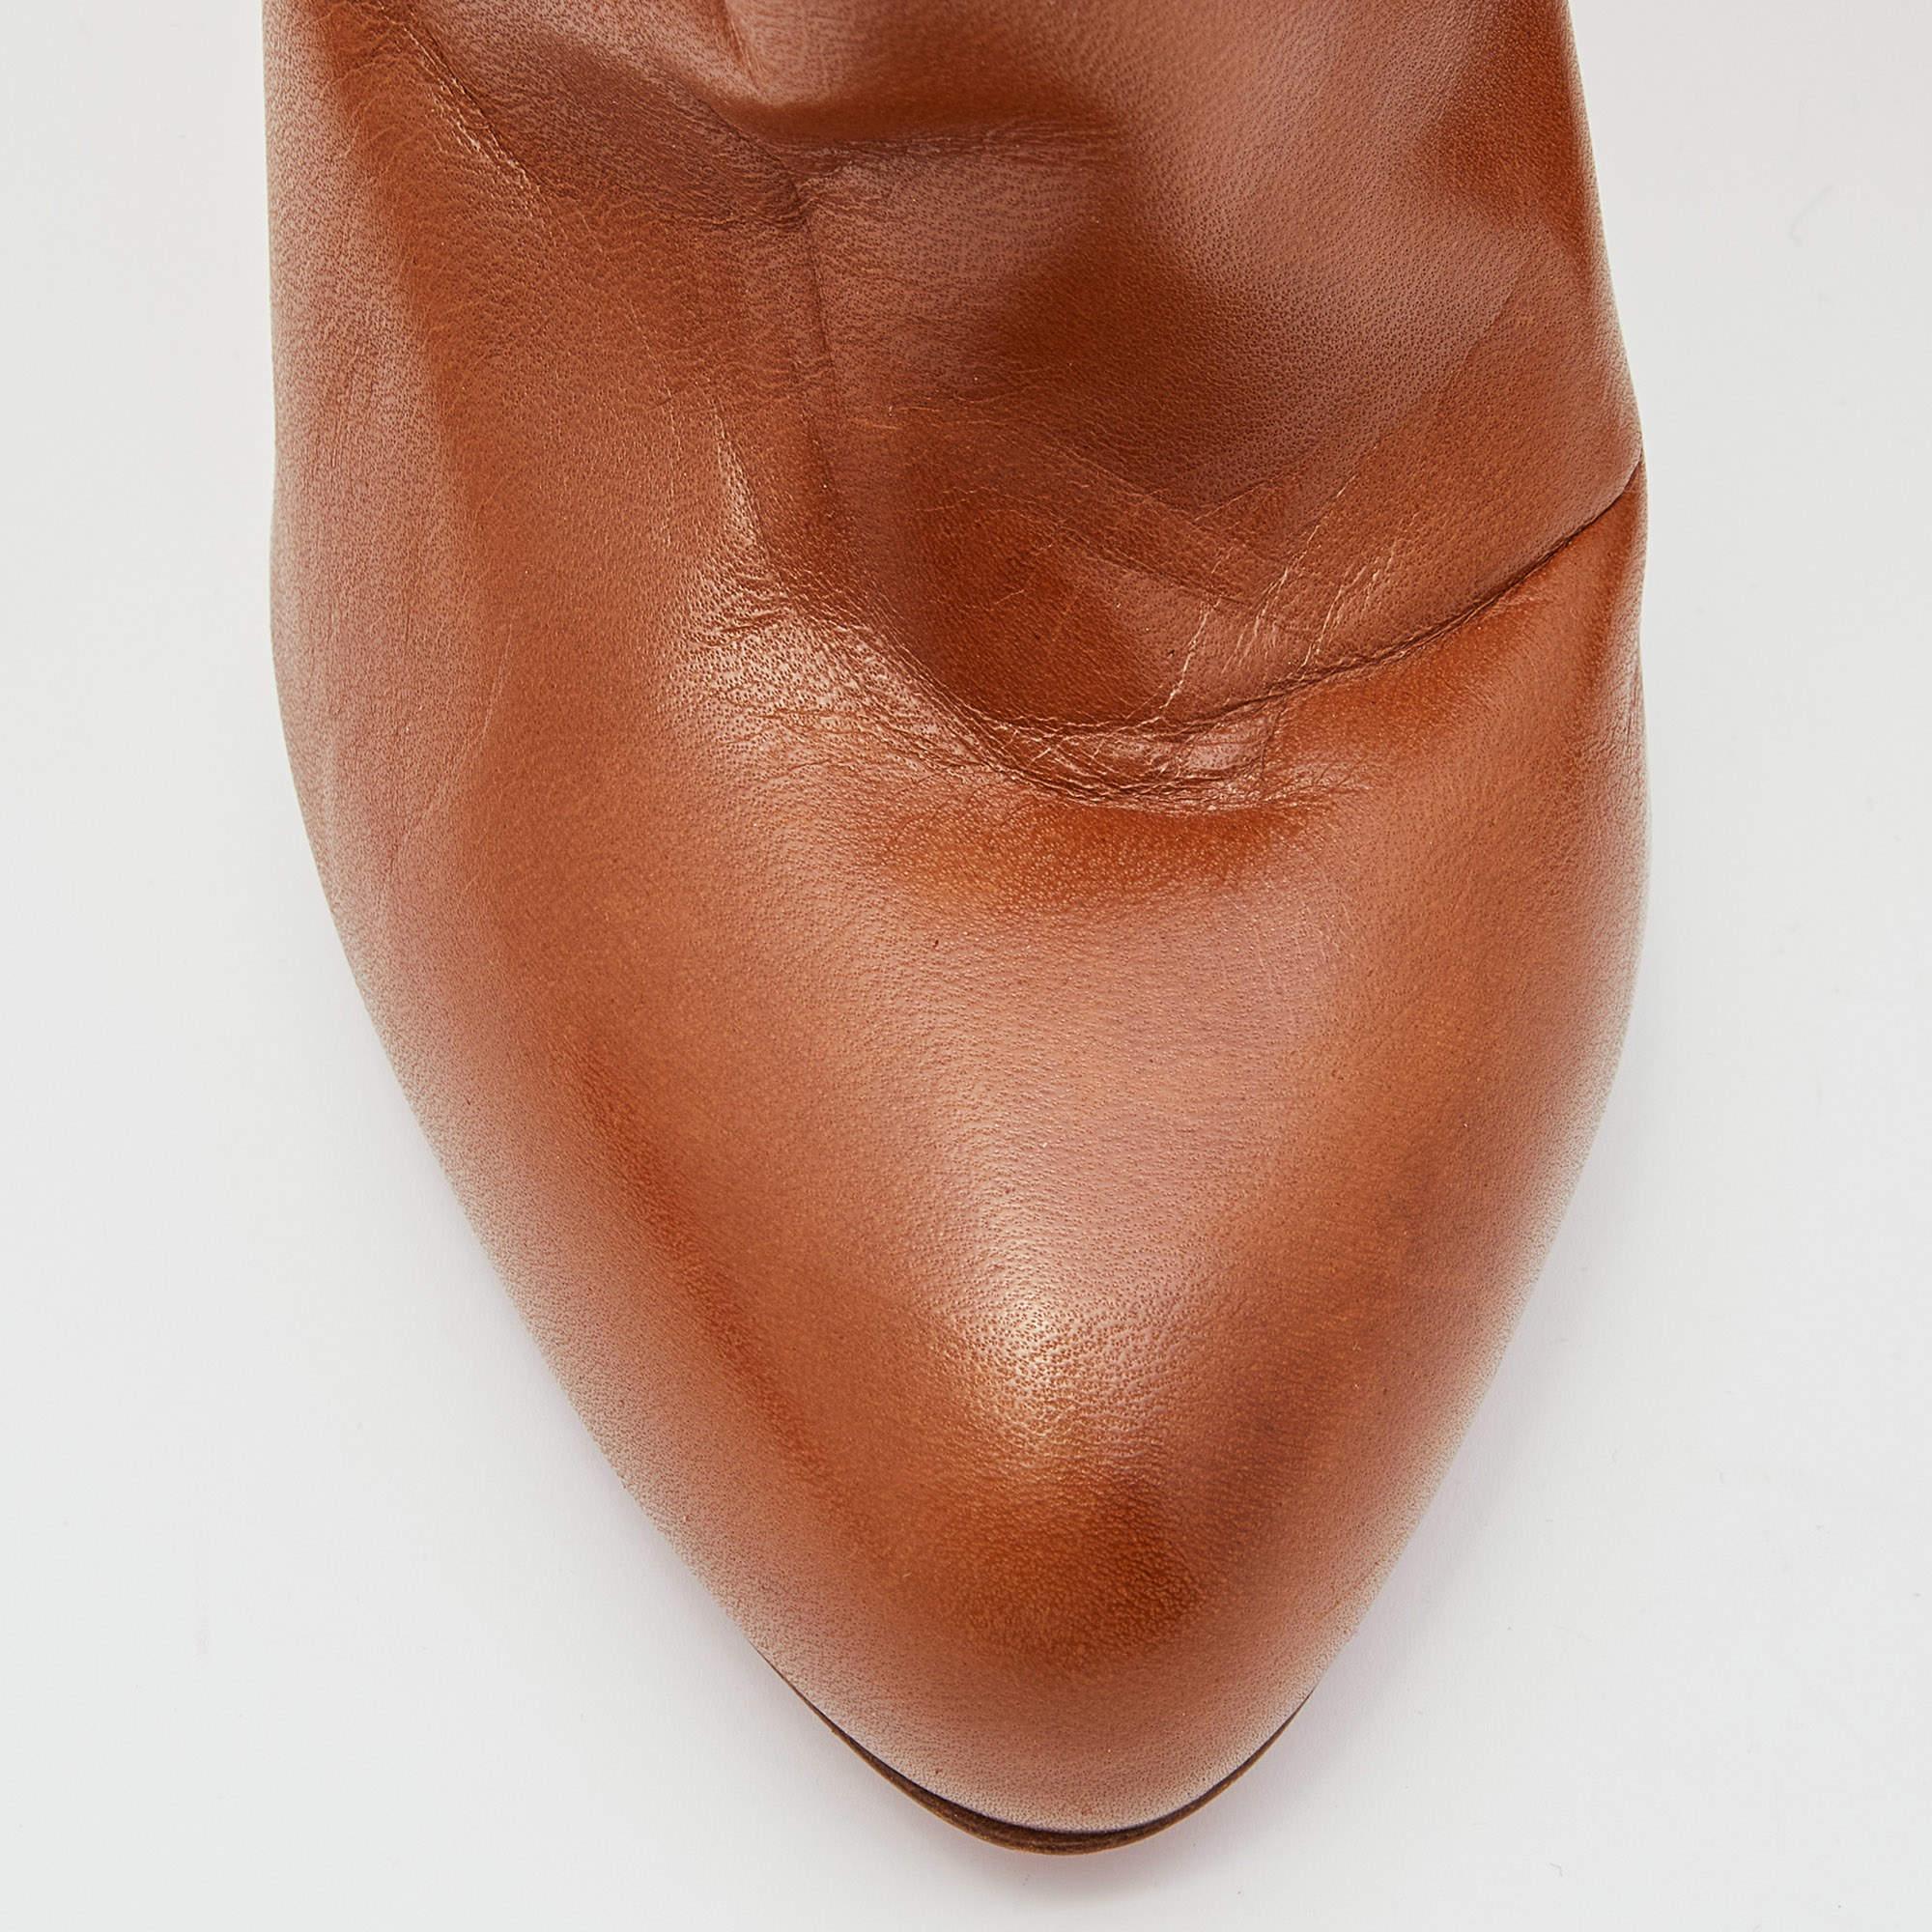 Christian Louboutin Tan Leather C'est Moi Ankle Booties Size 39.5 In Good Condition For Sale In Dubai, Al Qouz 2